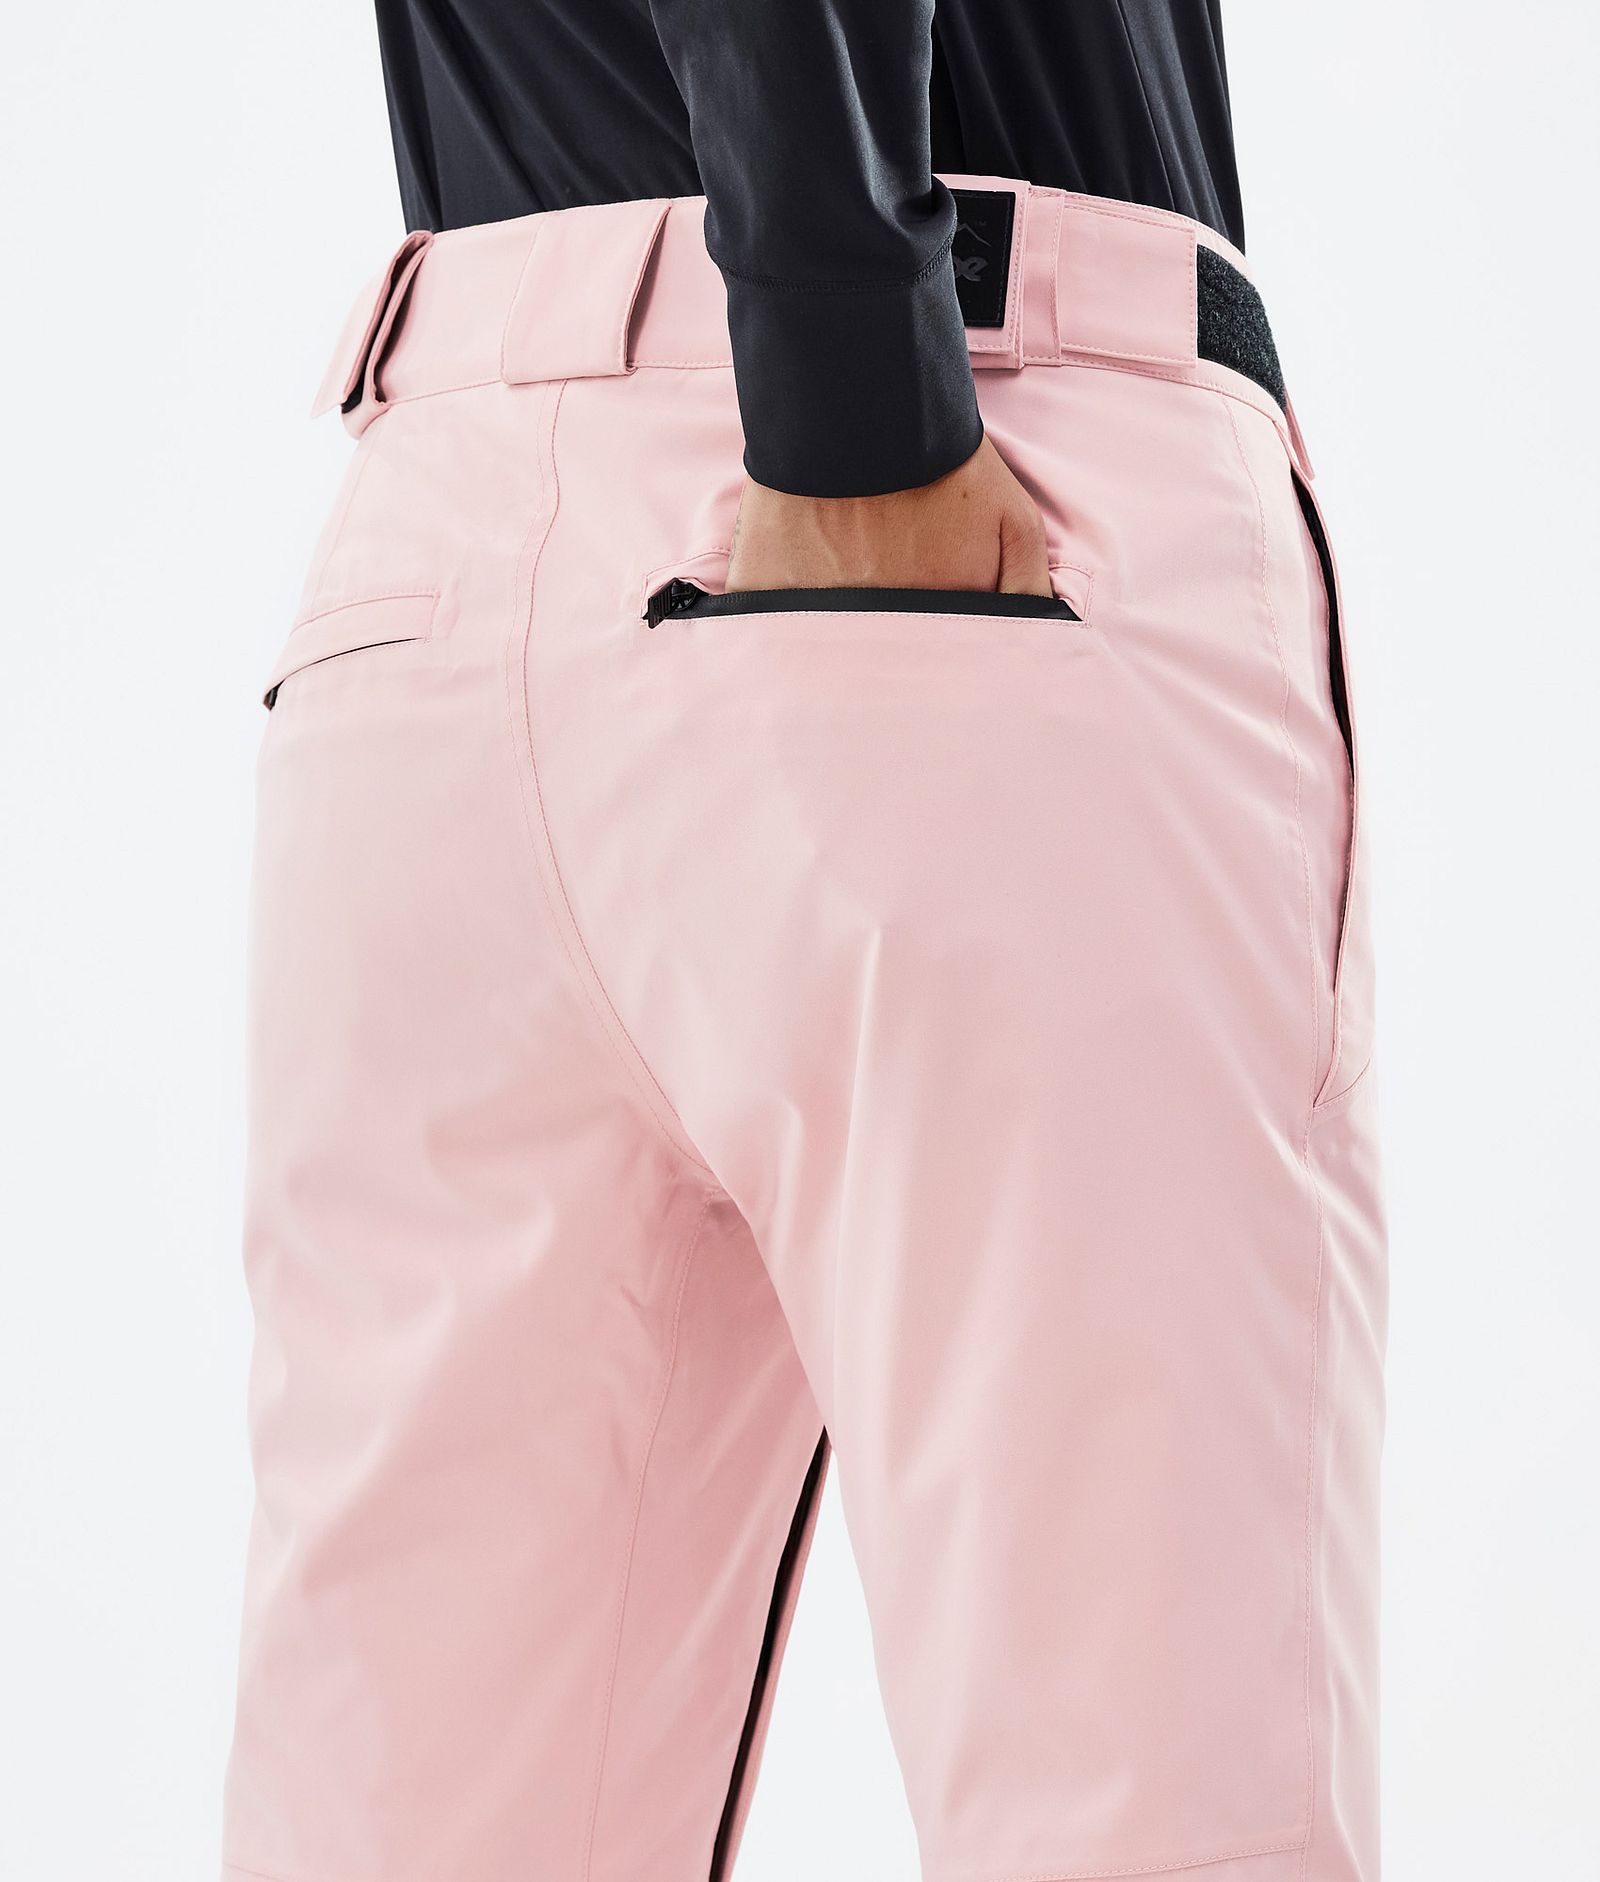 Dope Con W 2022 Skihose Damen Soft Pink - Rosa